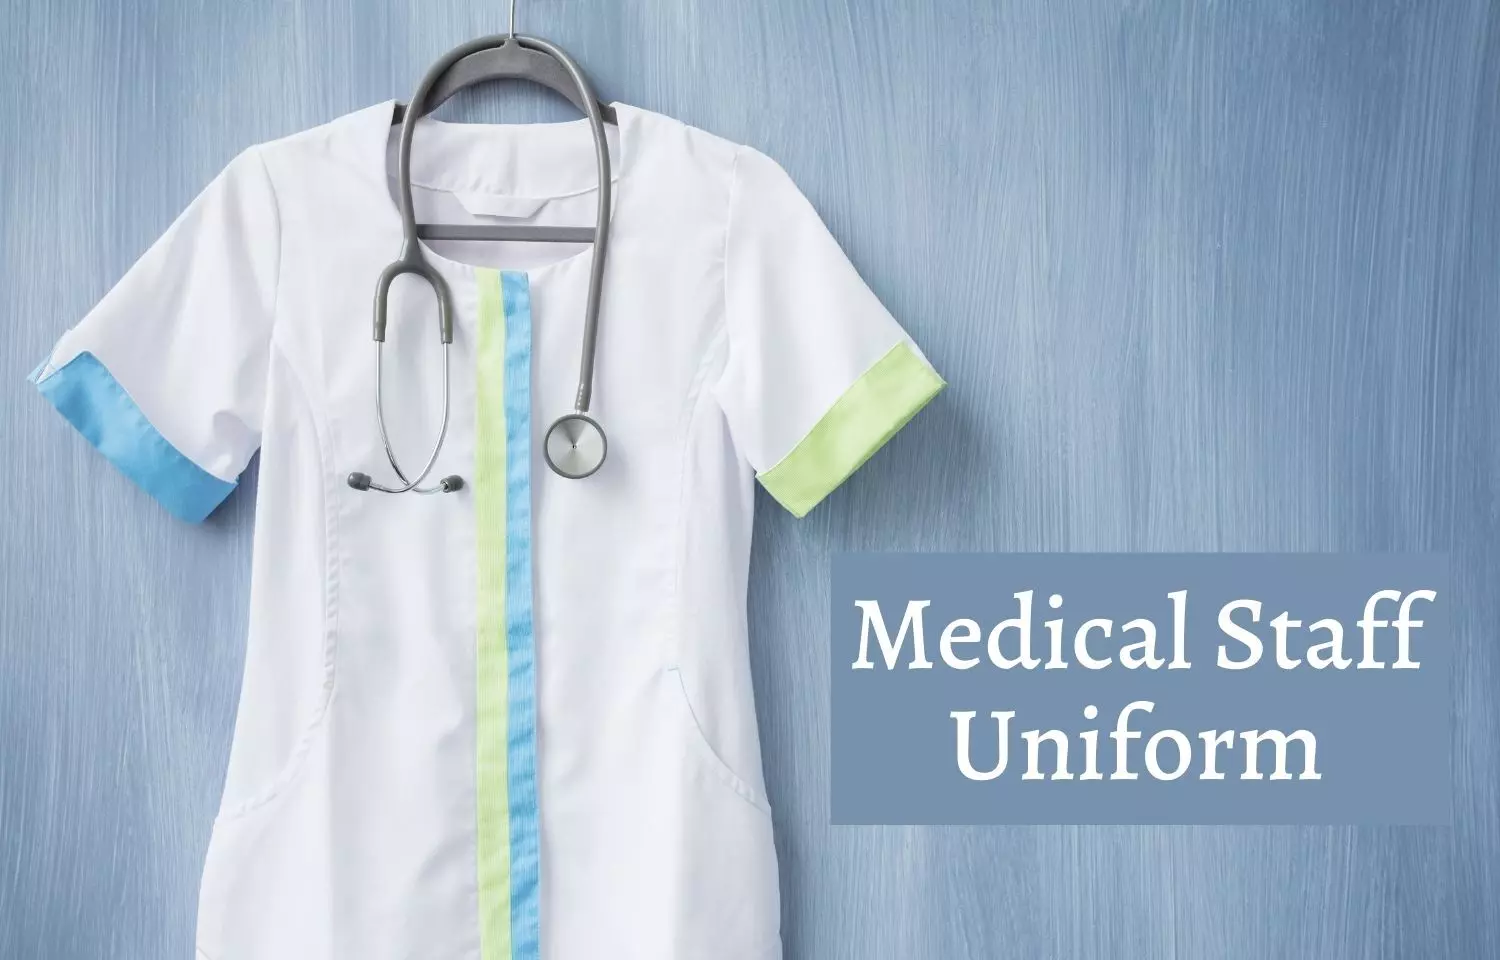 Wear uniform on duty or face action: Delhi govt tells Medical staff